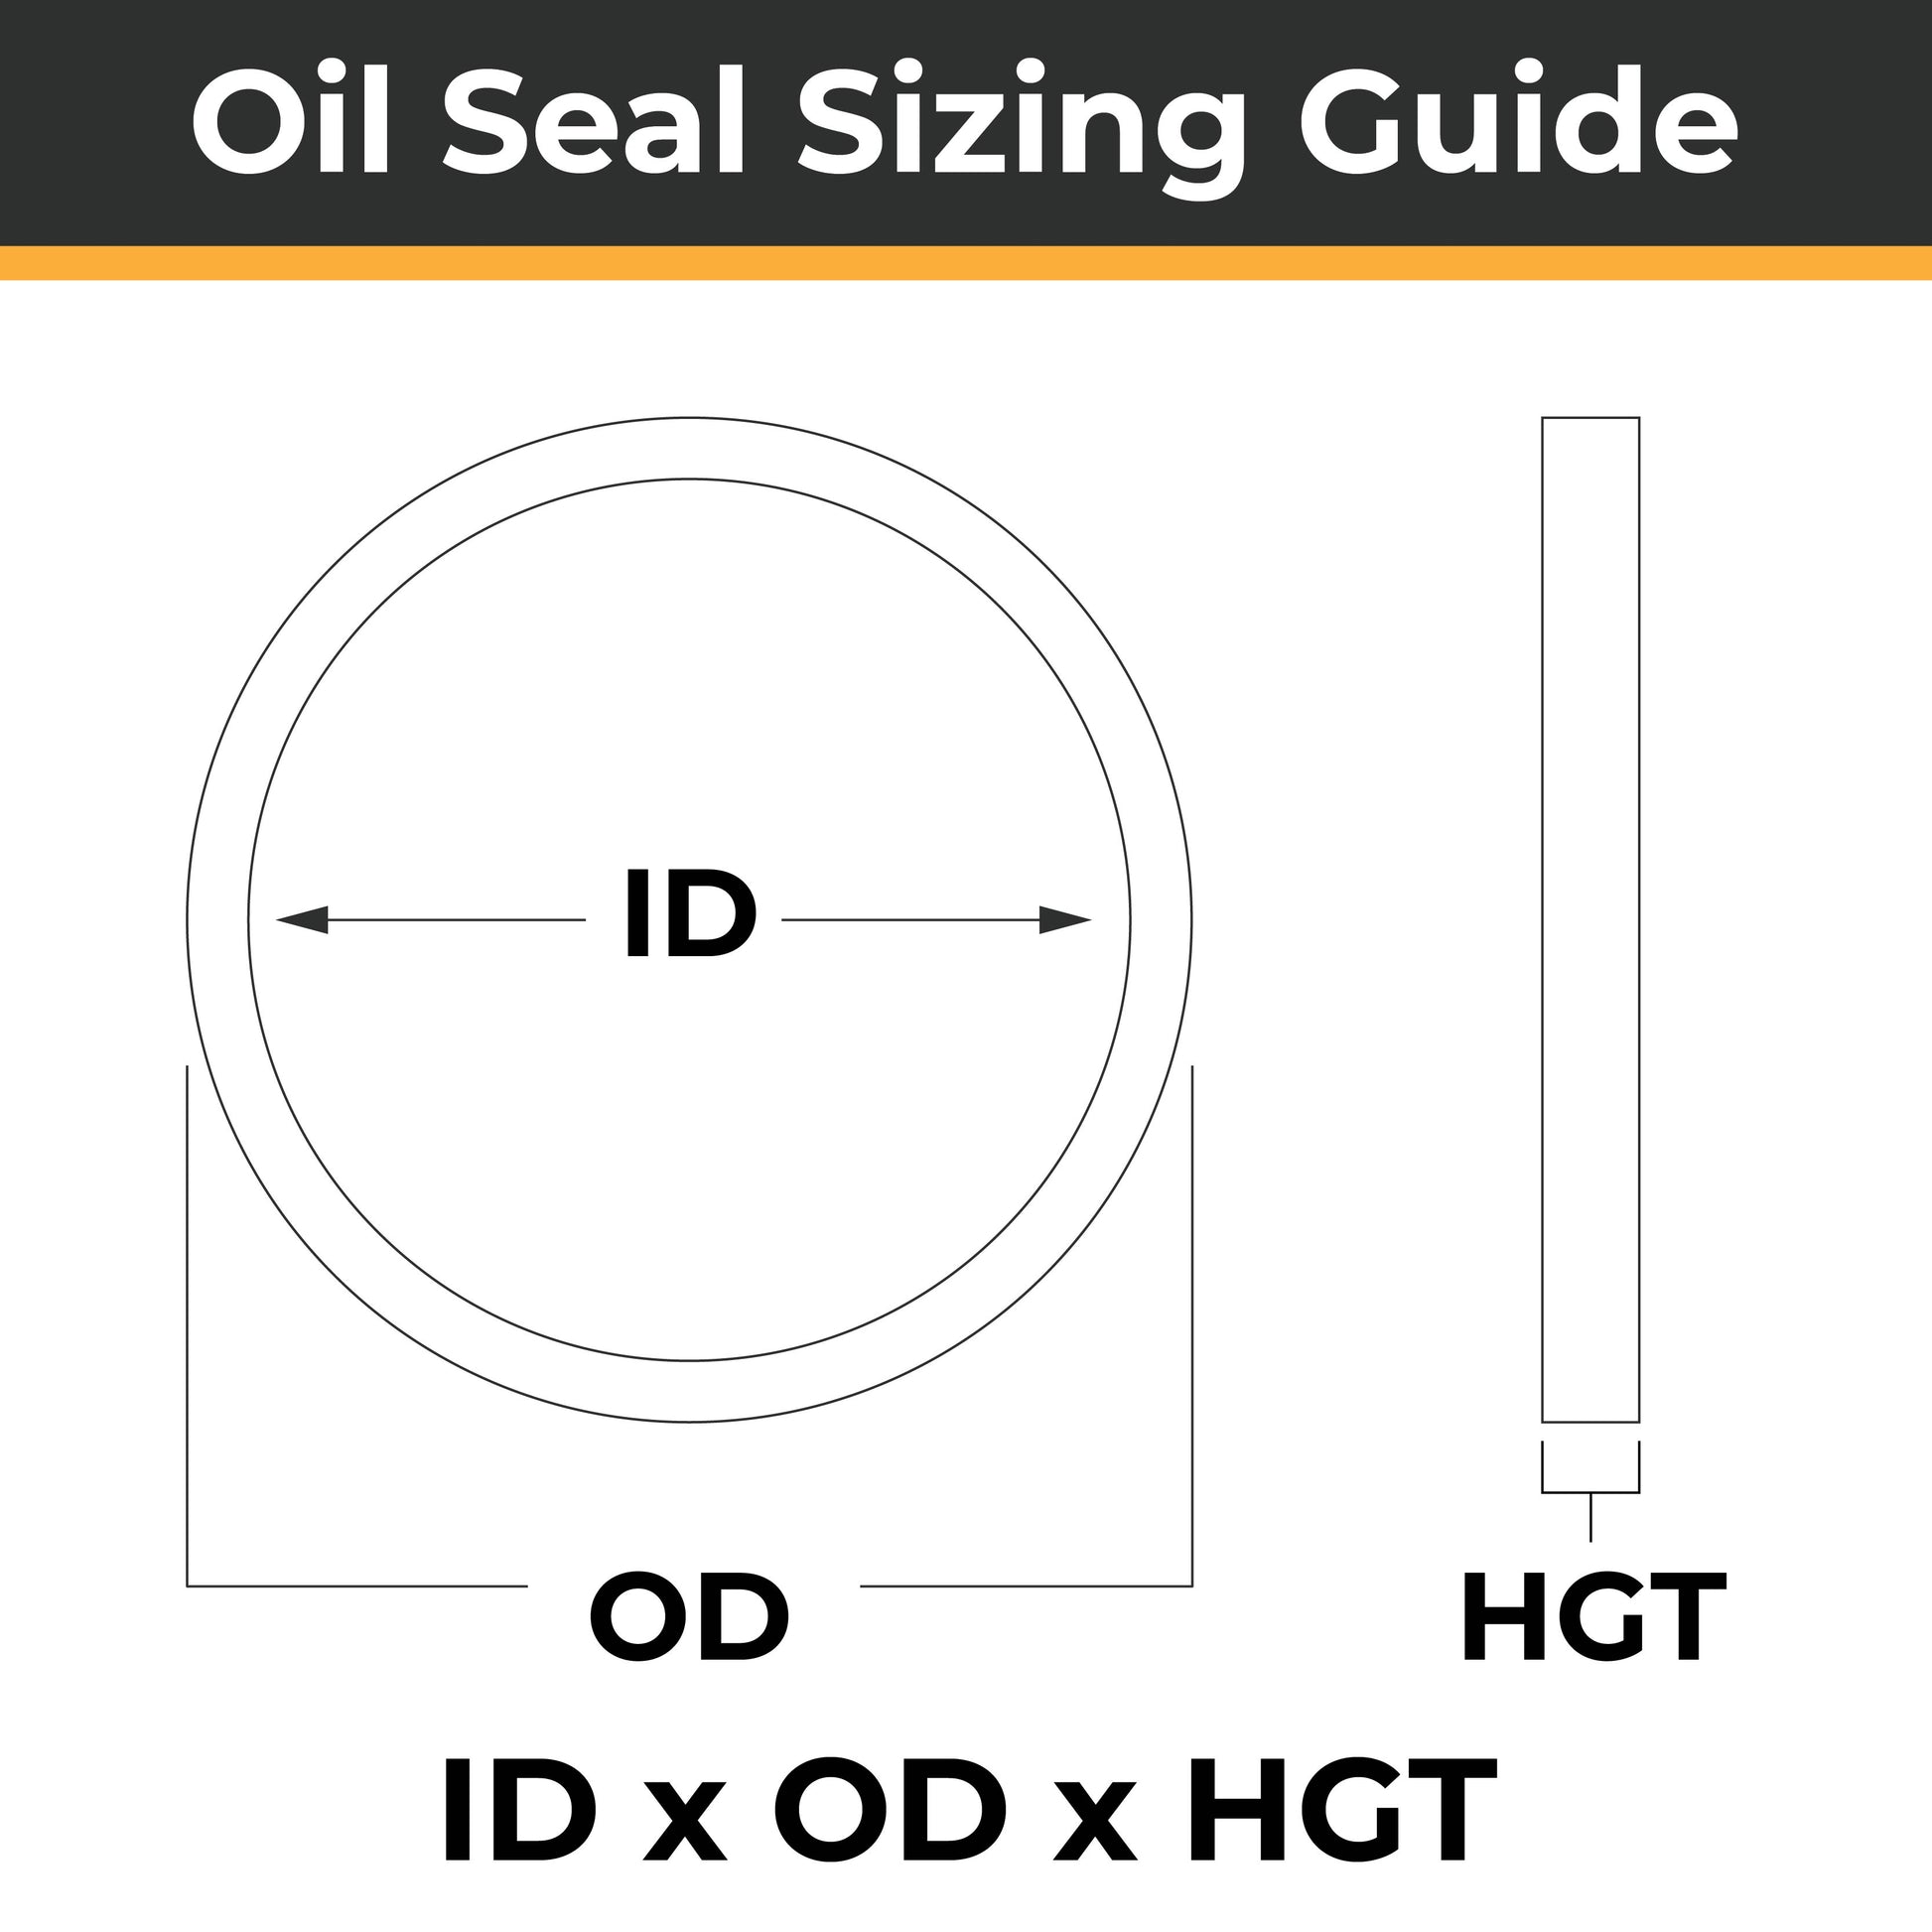 20mm x 30mm x 10mm - R23 (TC) Oil Seal - Totally Seals®